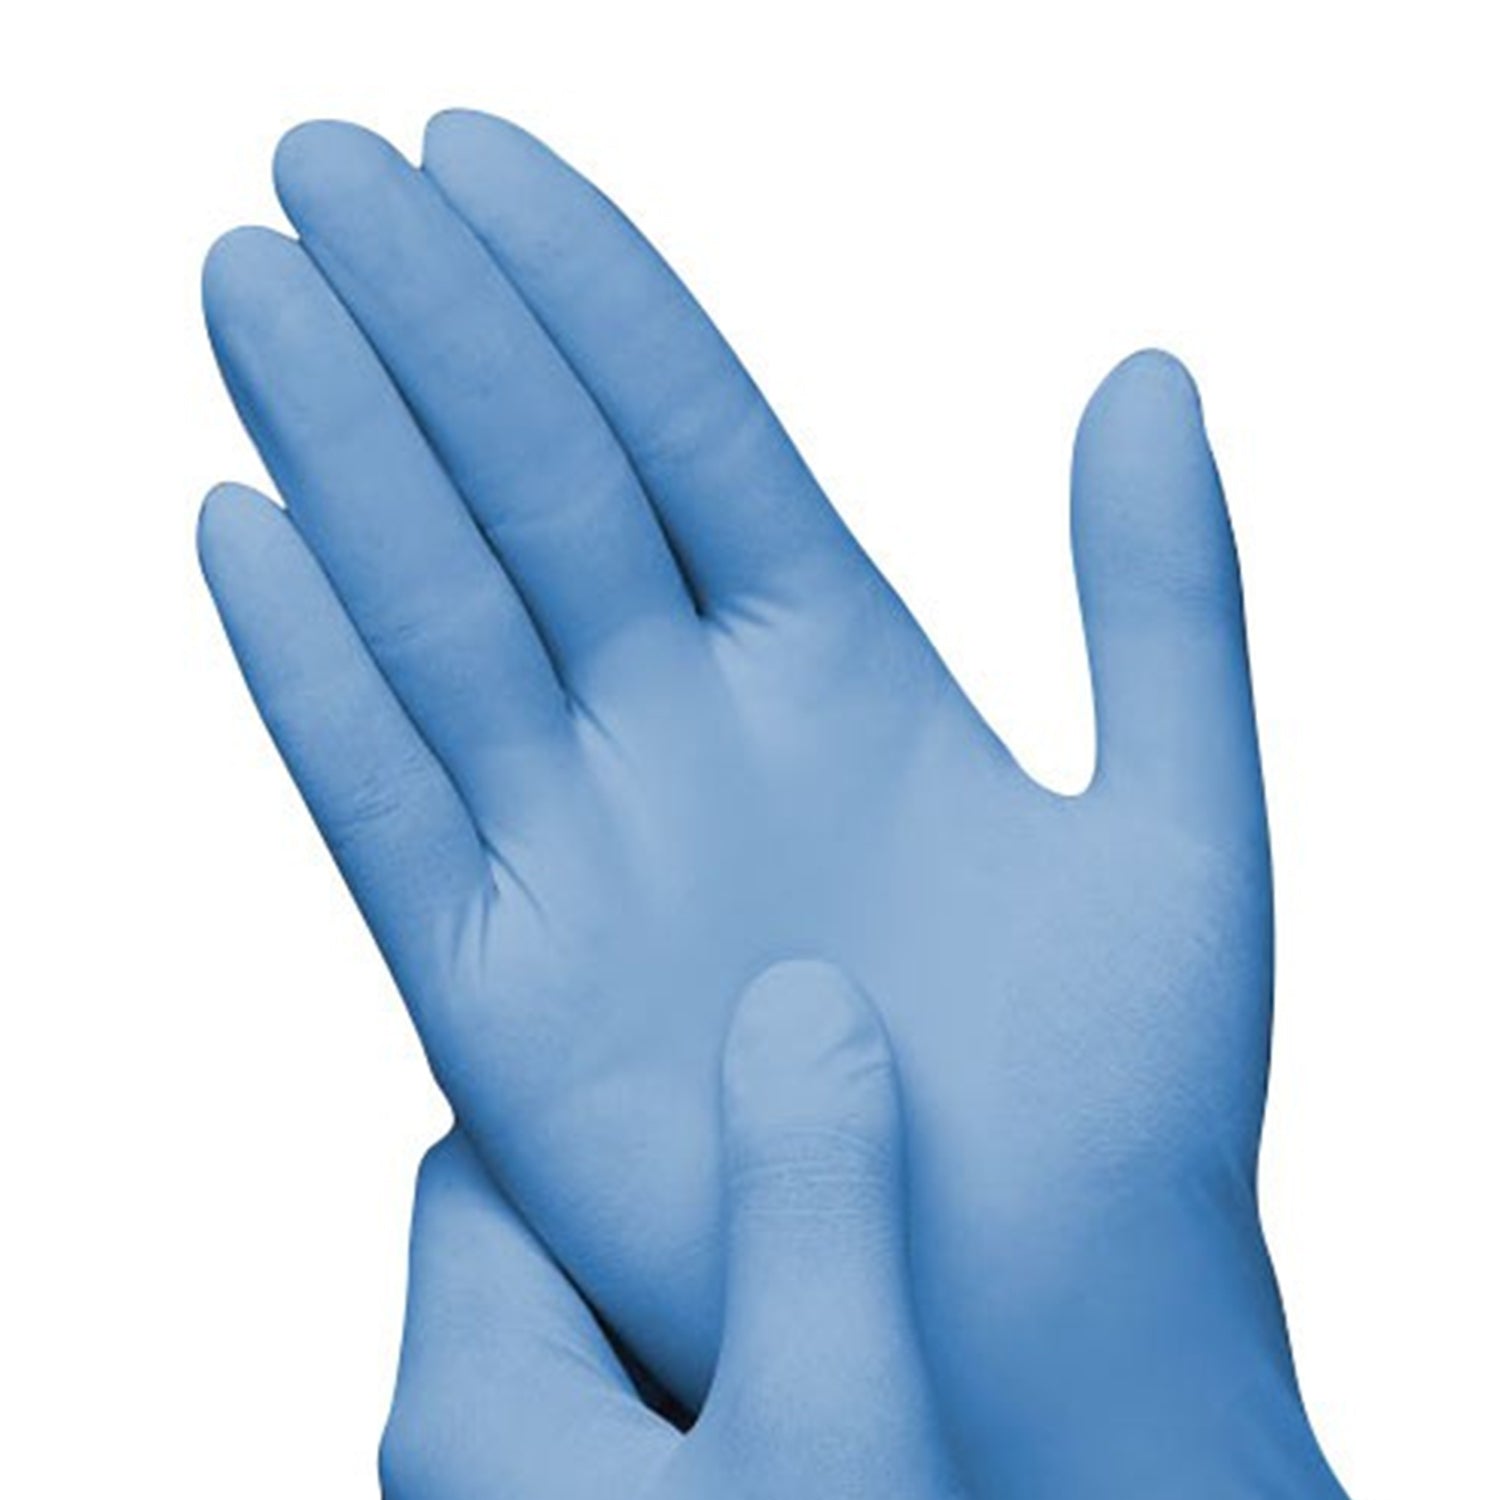 Premier AF Nitrile Examination Gloves | Sterile | Latex Free | Medium | Pack of 50 Pairs (6)